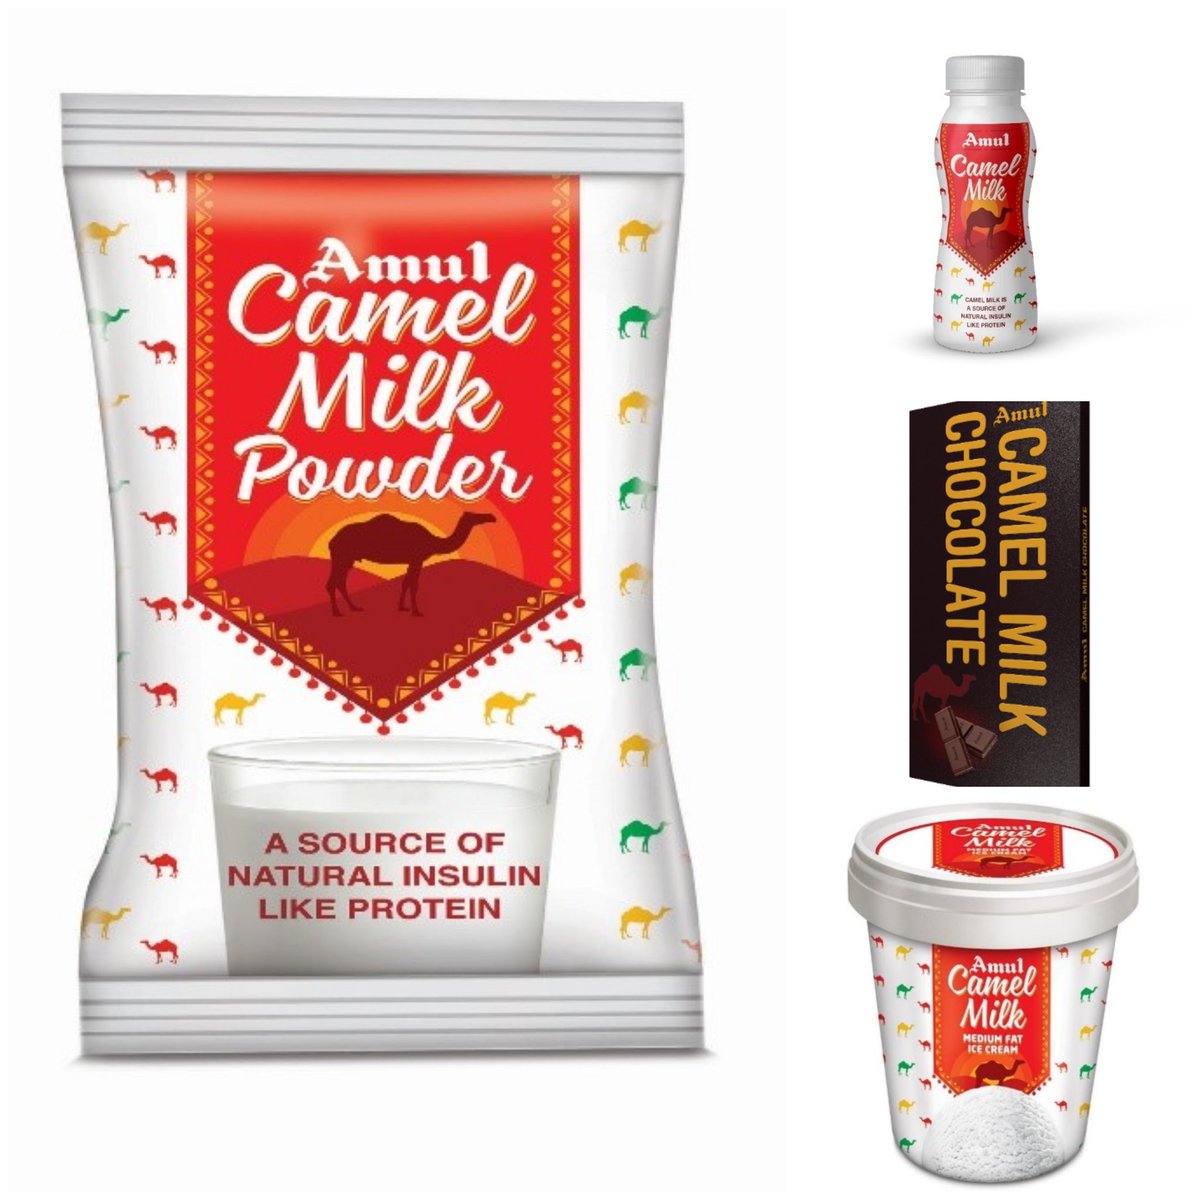 AMUL introduces Camel Milk Powder and Camel Milk Ice cream